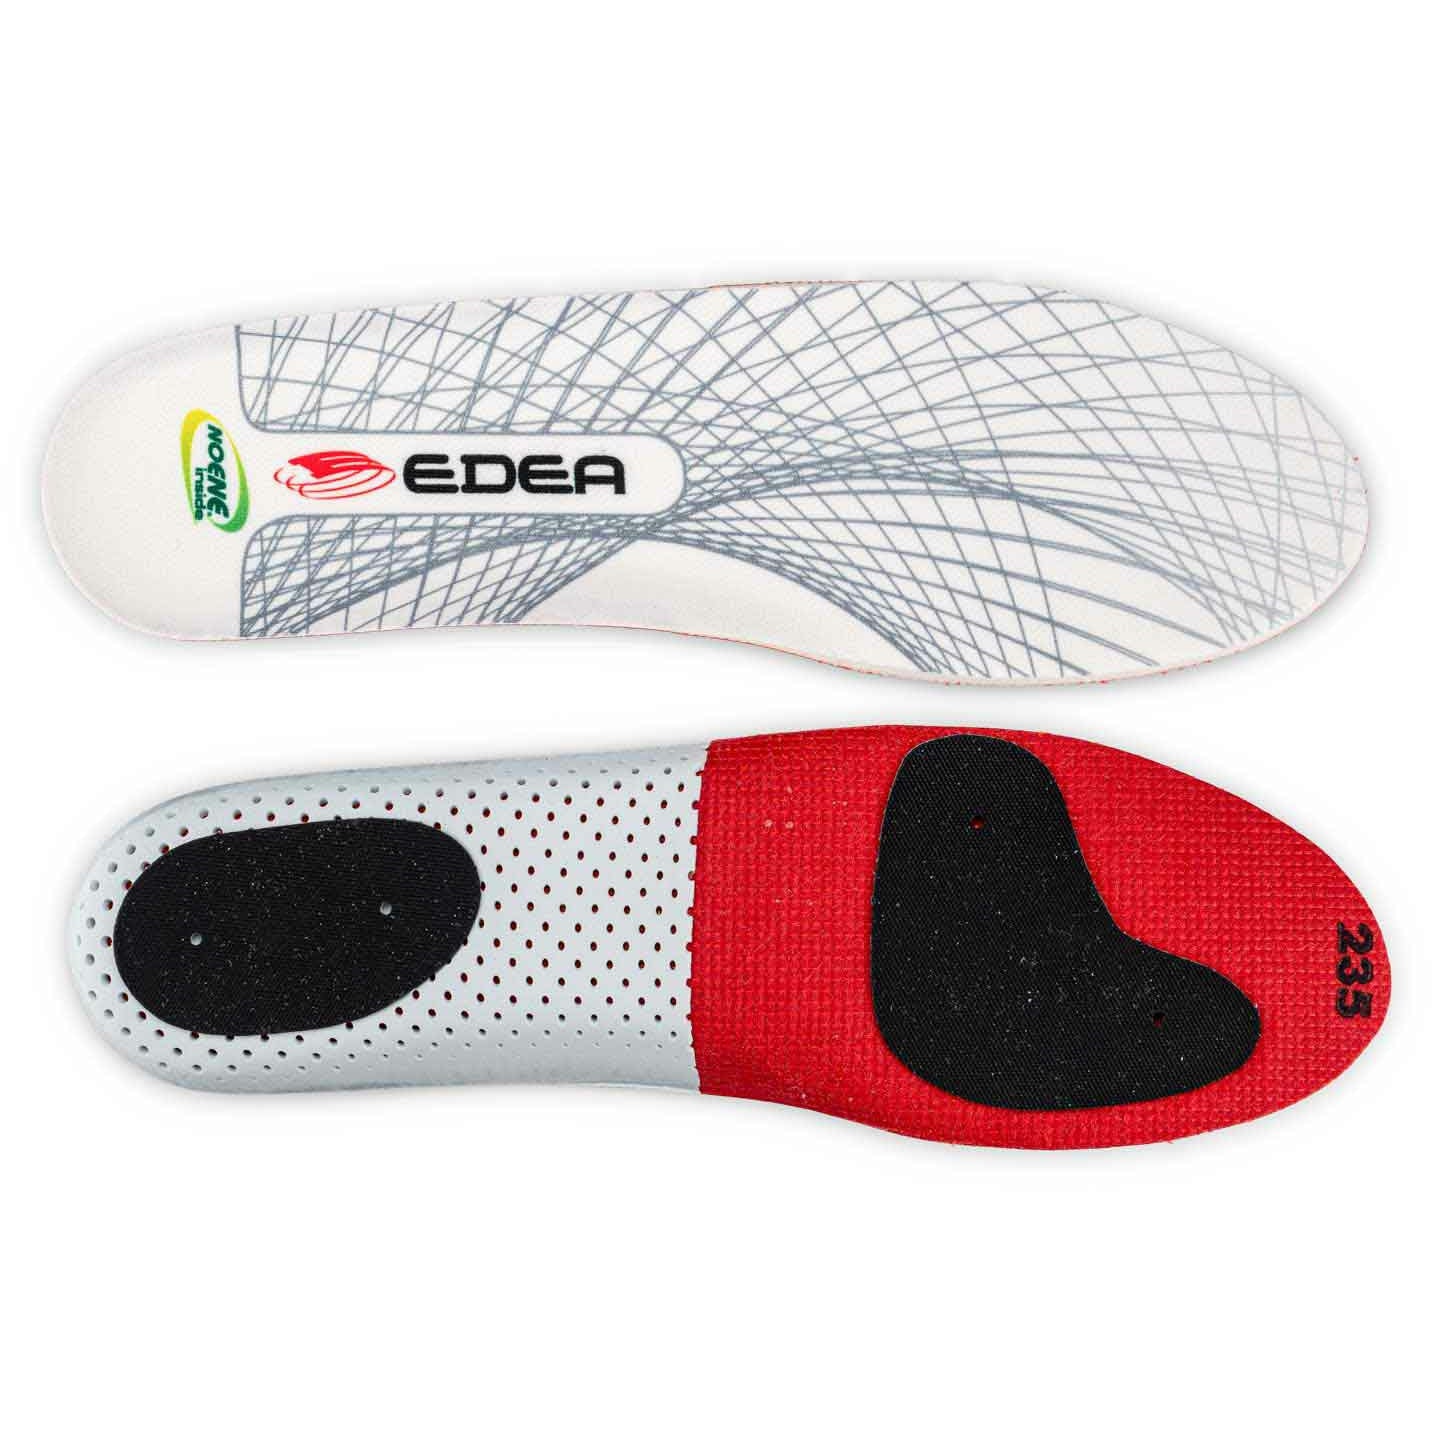 EDEA  E-SOLE  Innlegg